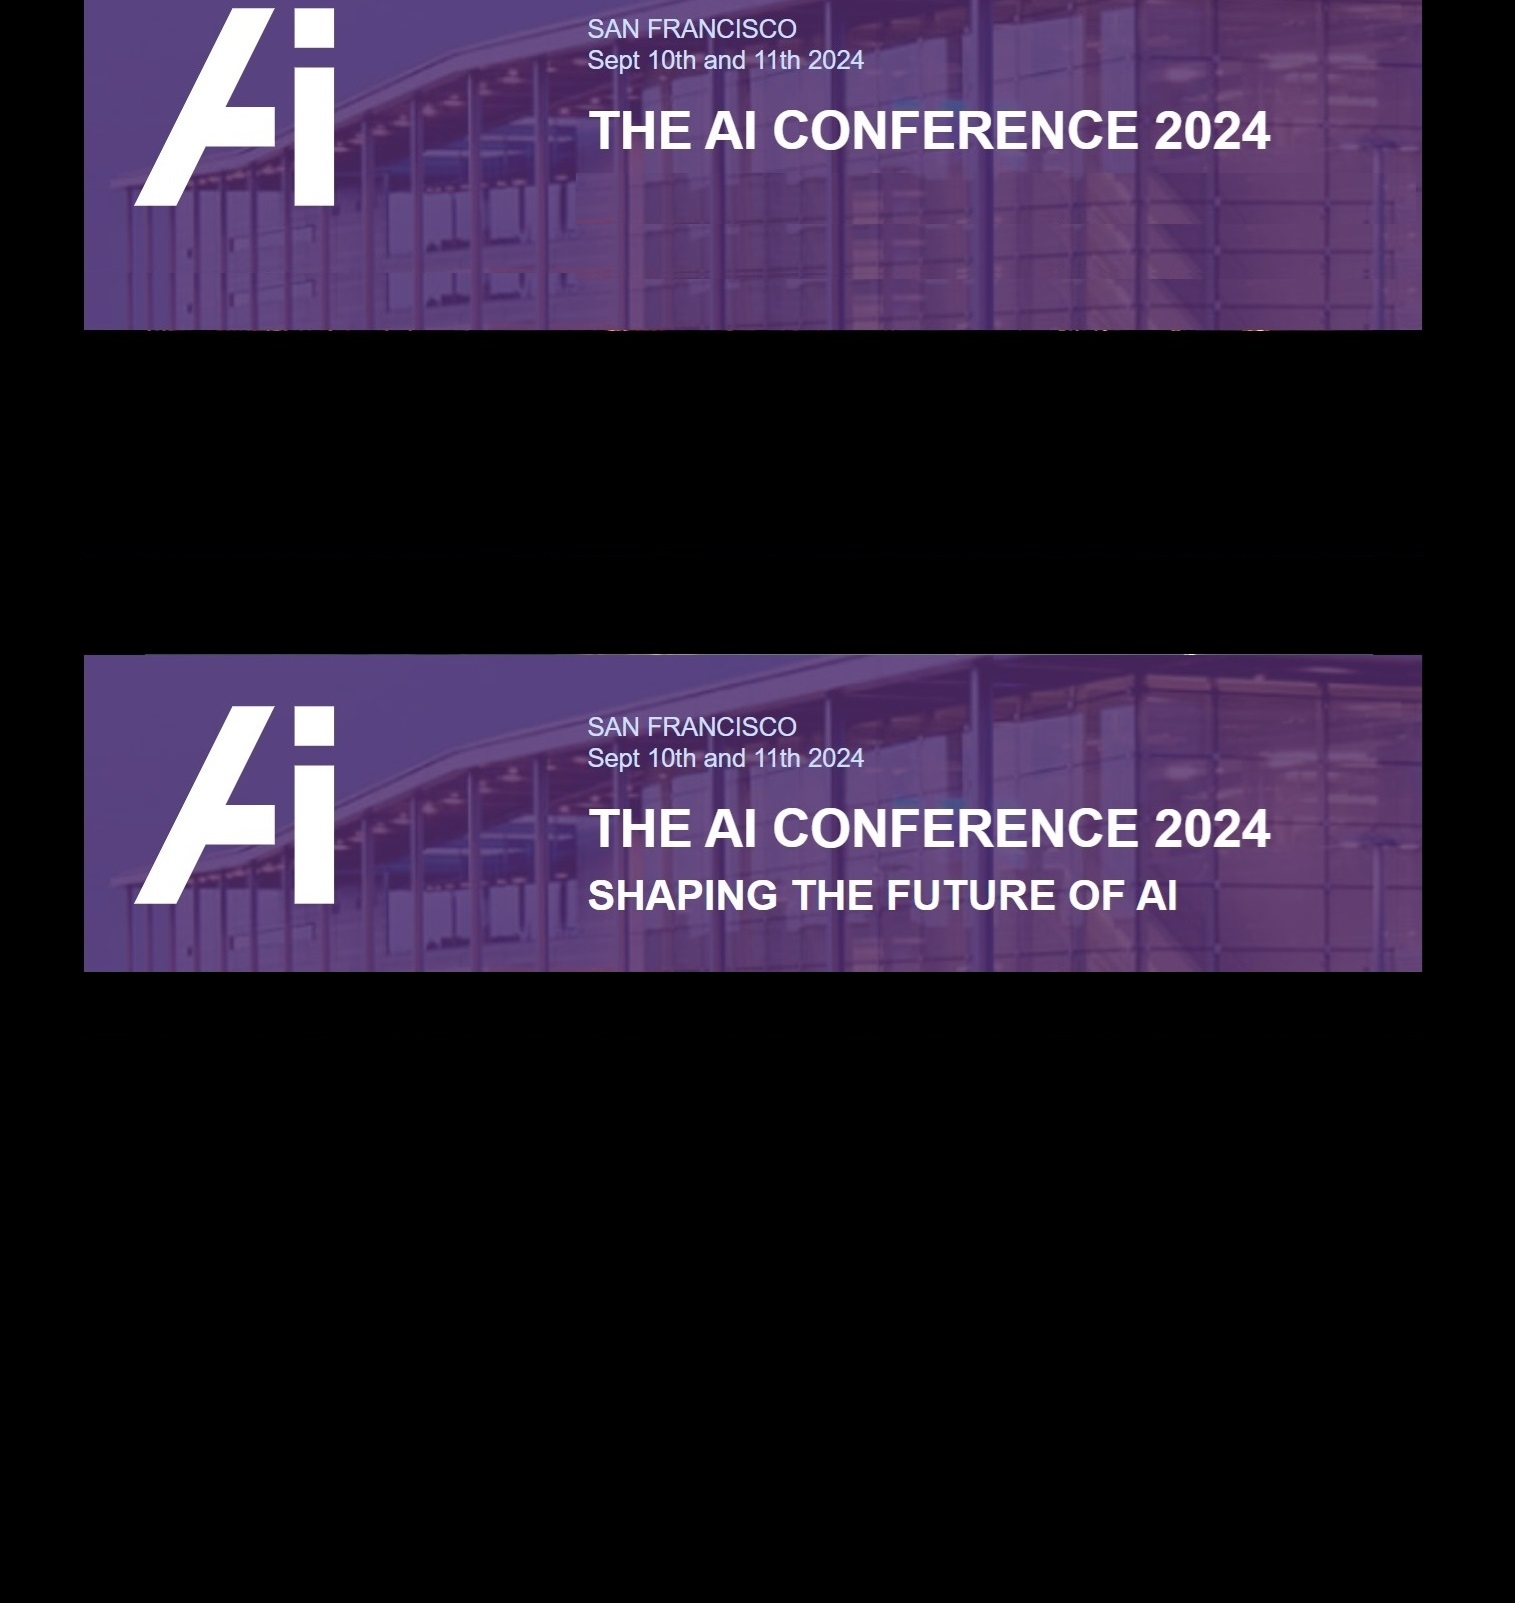 BoardroomIQ to Attend the AI Conference 2024 in San Francisco.